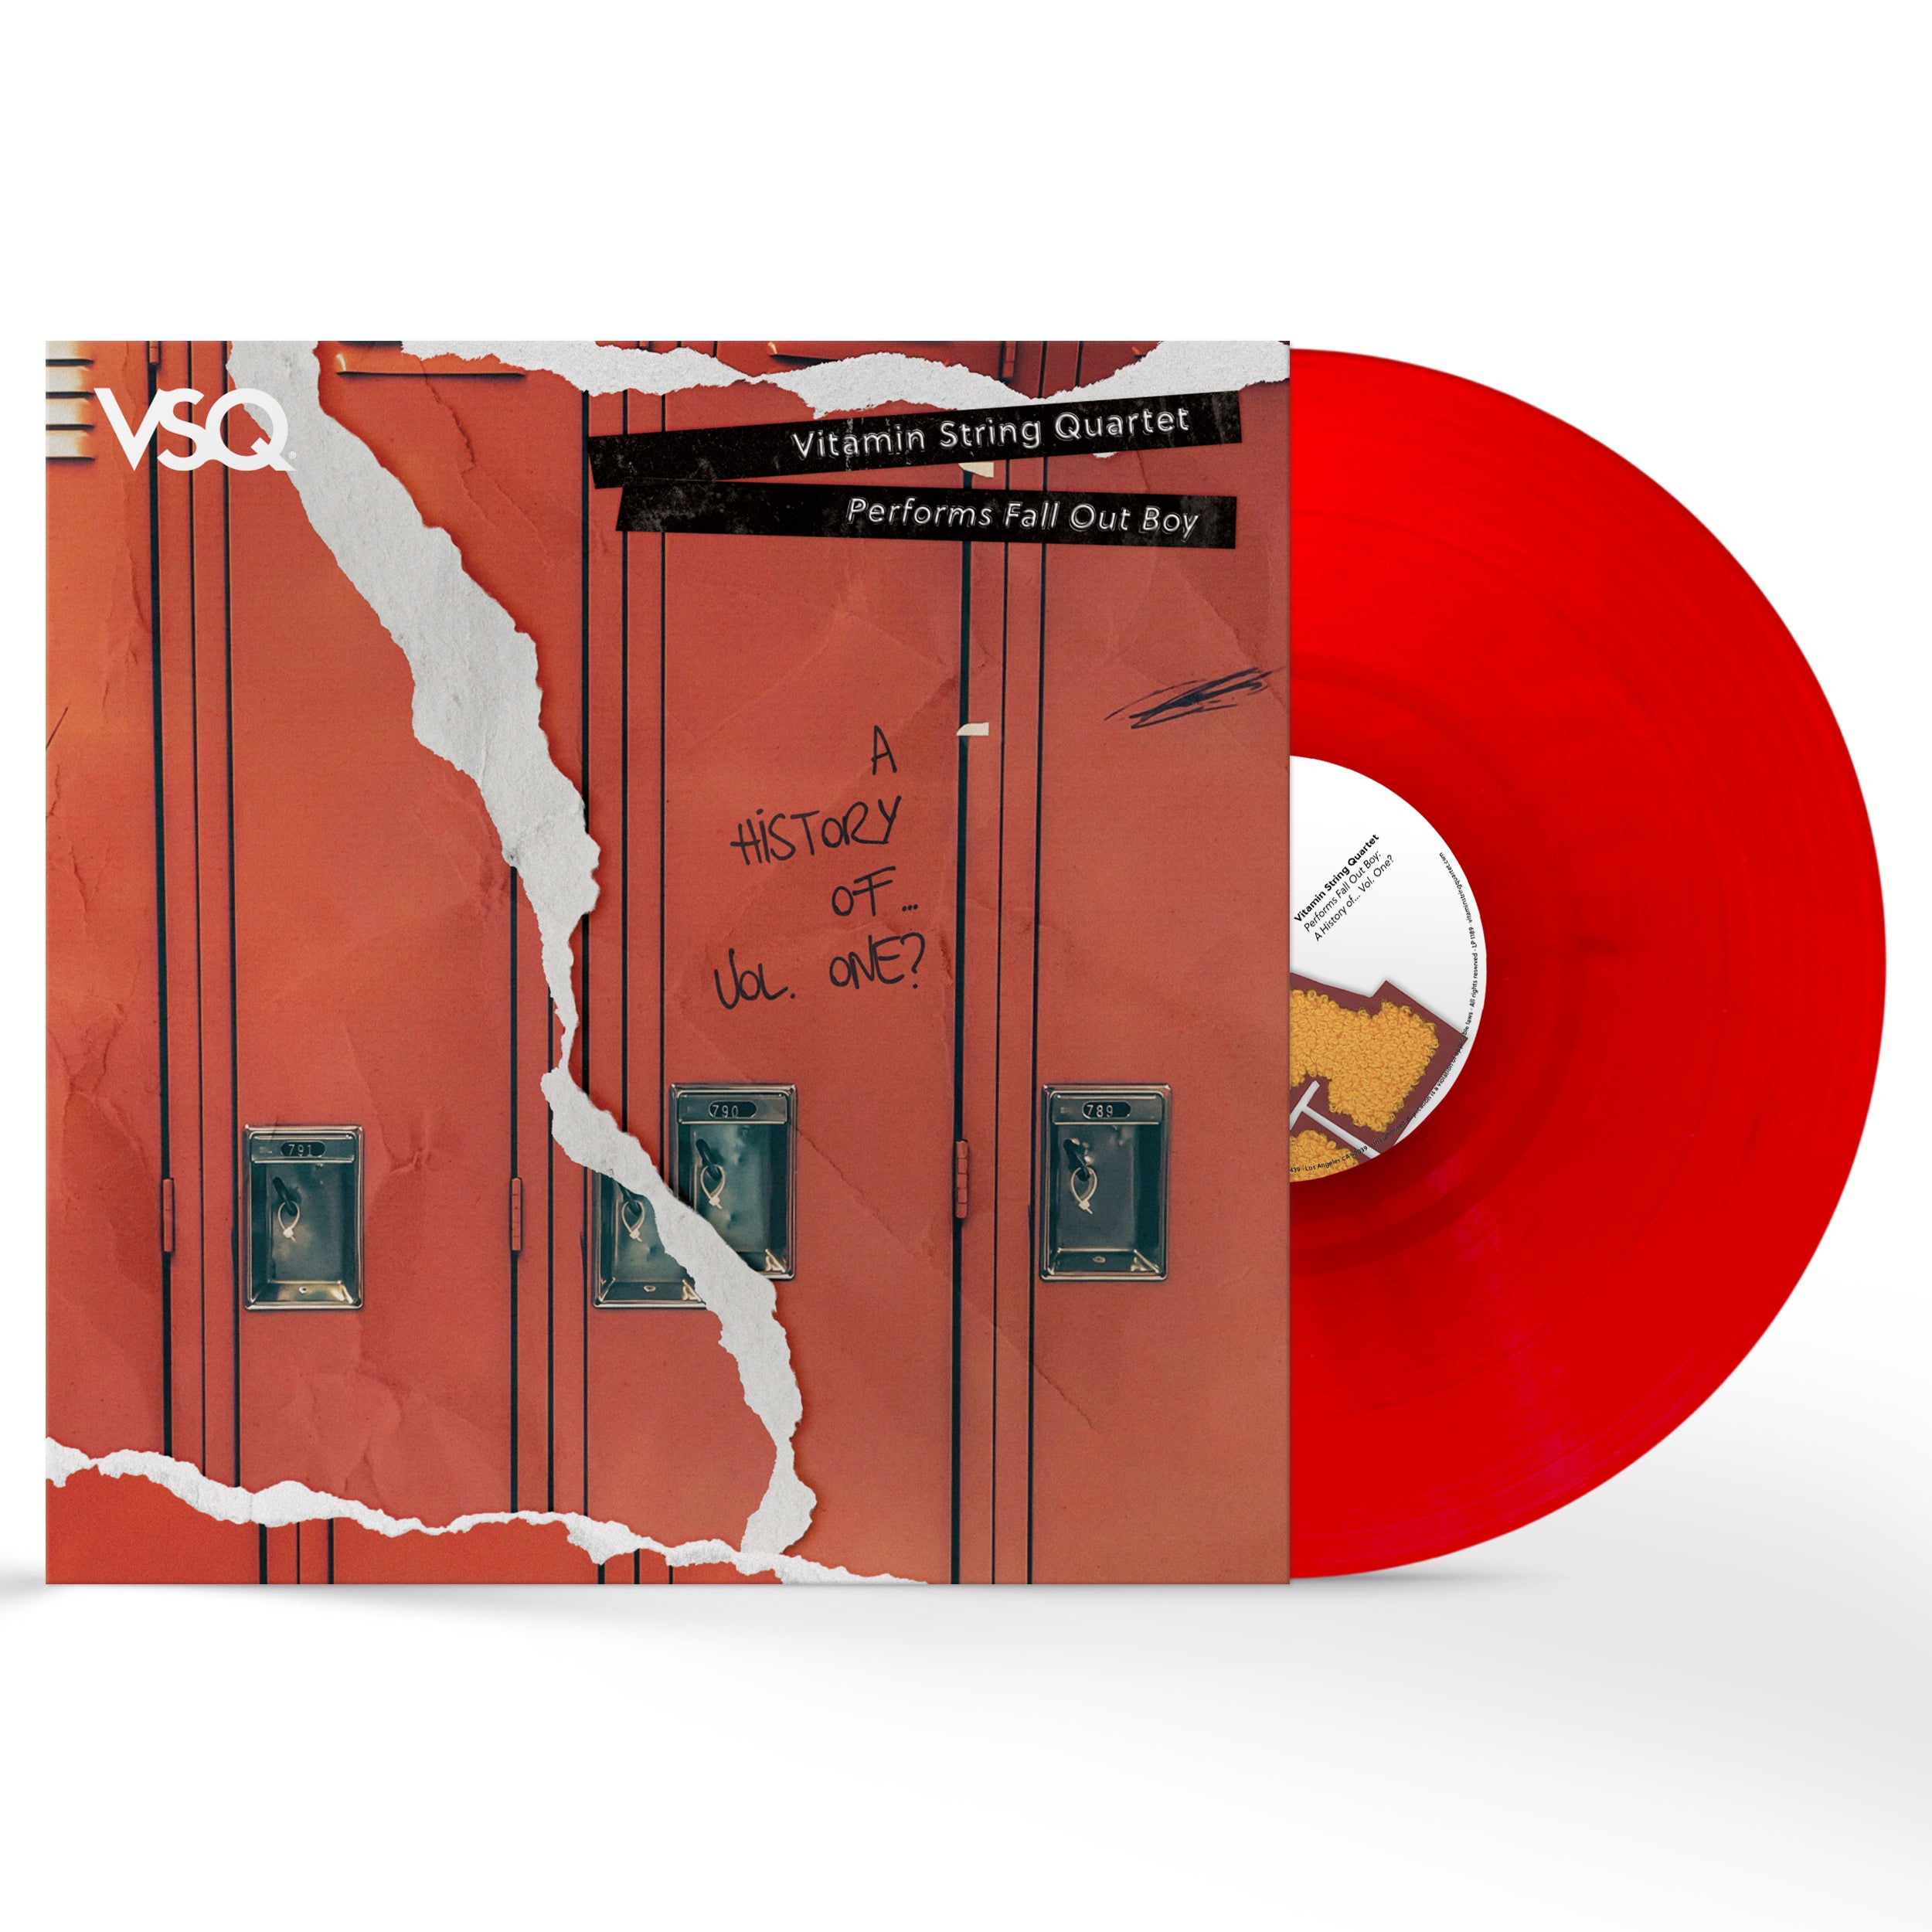 VSQ Performs Fall Out Boy: A History of... Vol. 1 - LP